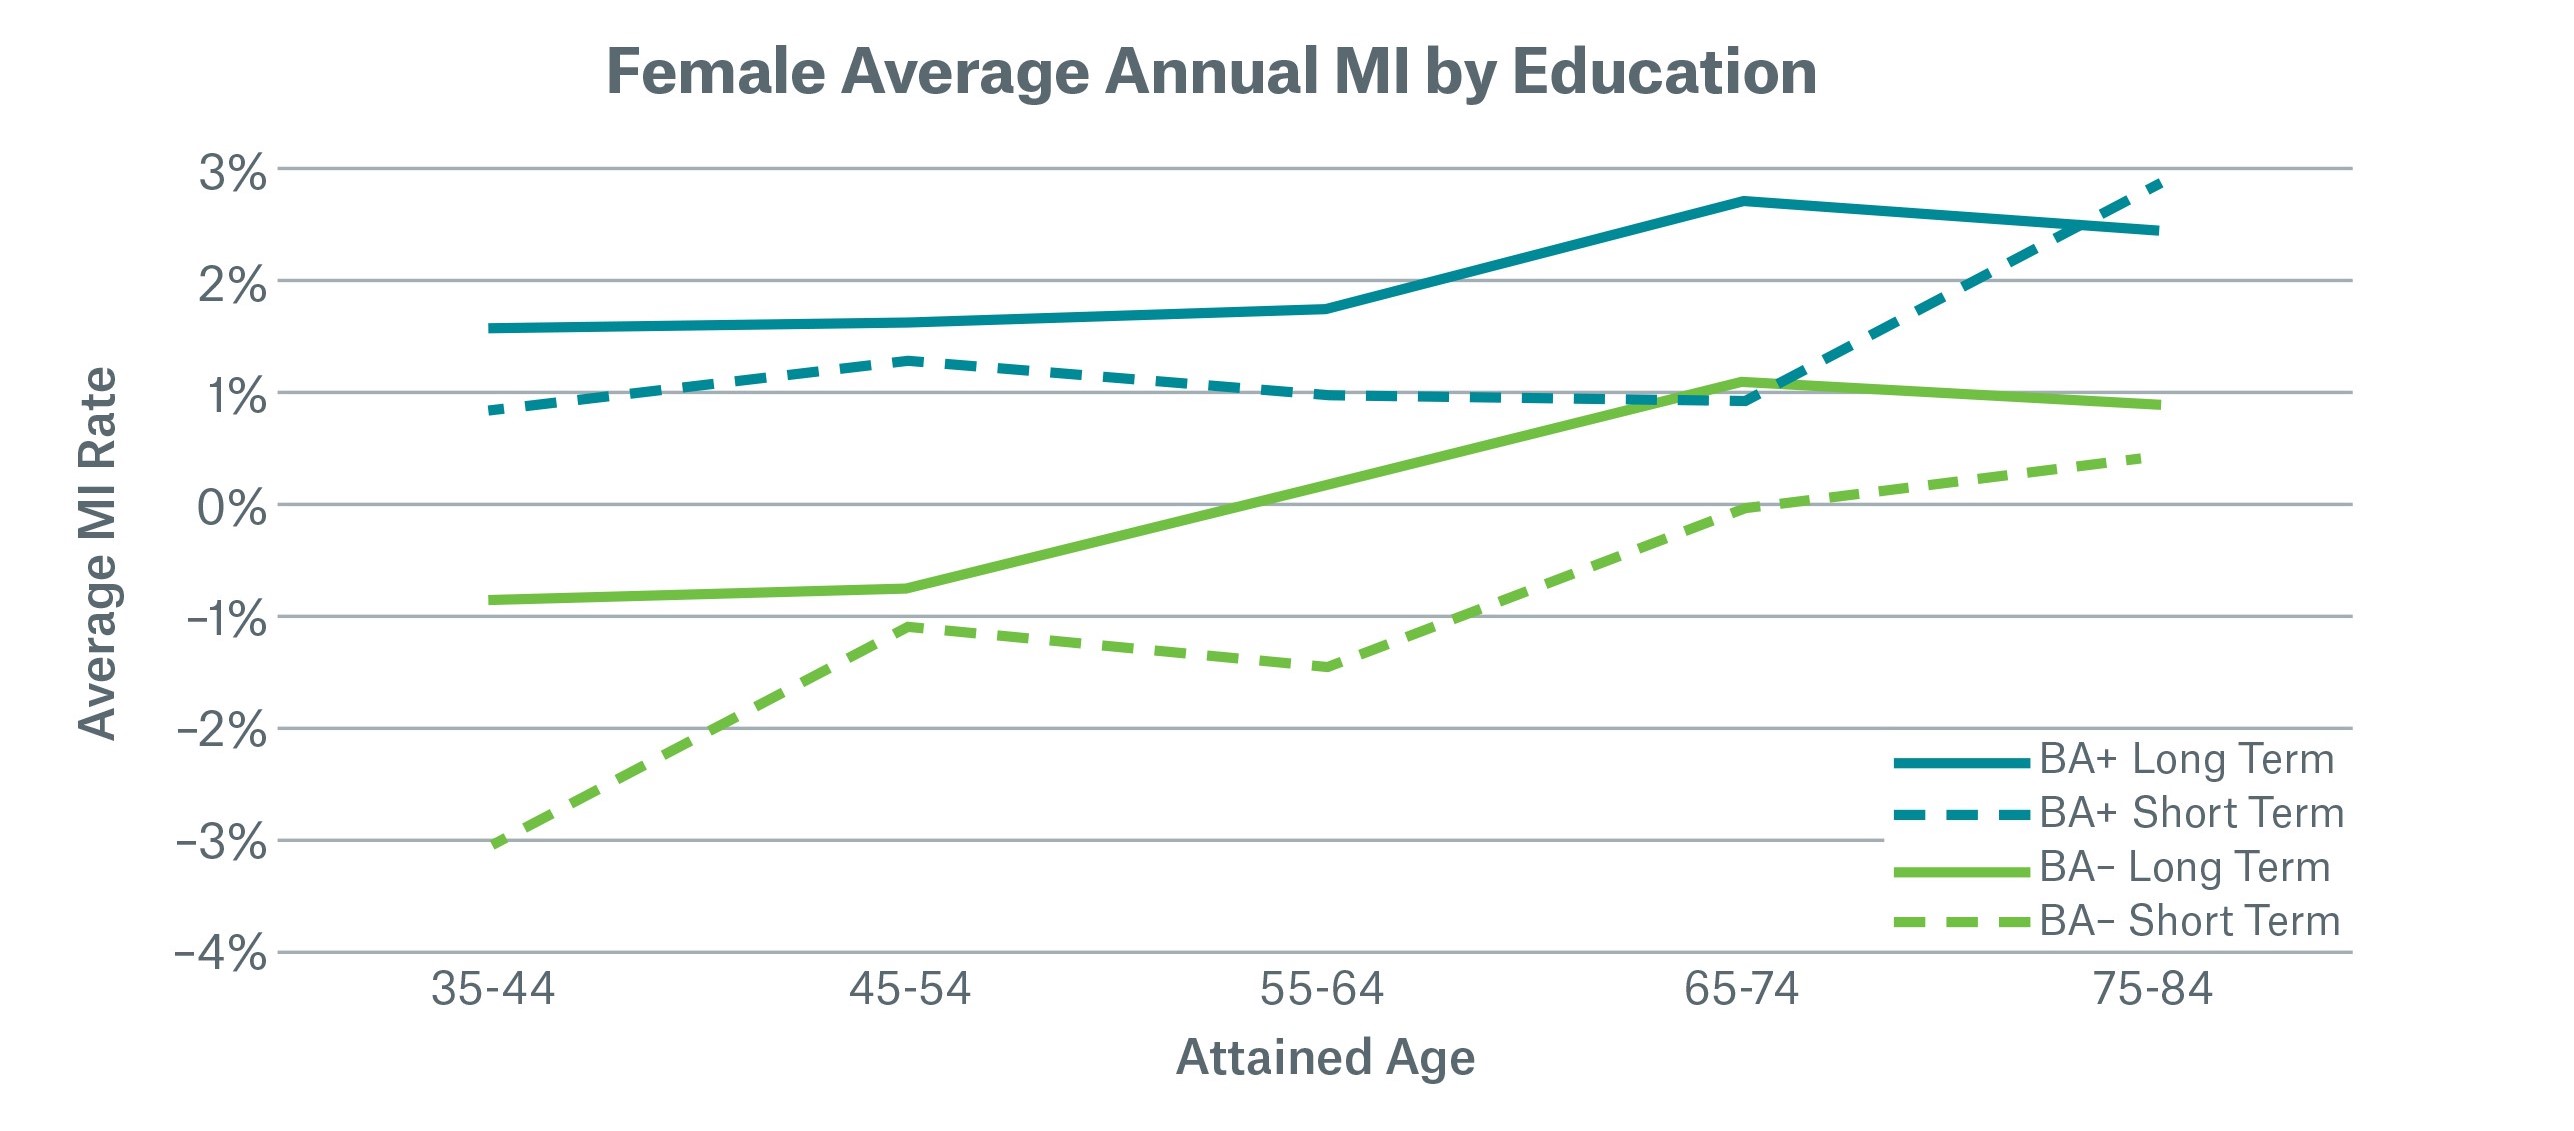 Female Average Annual MI by Education